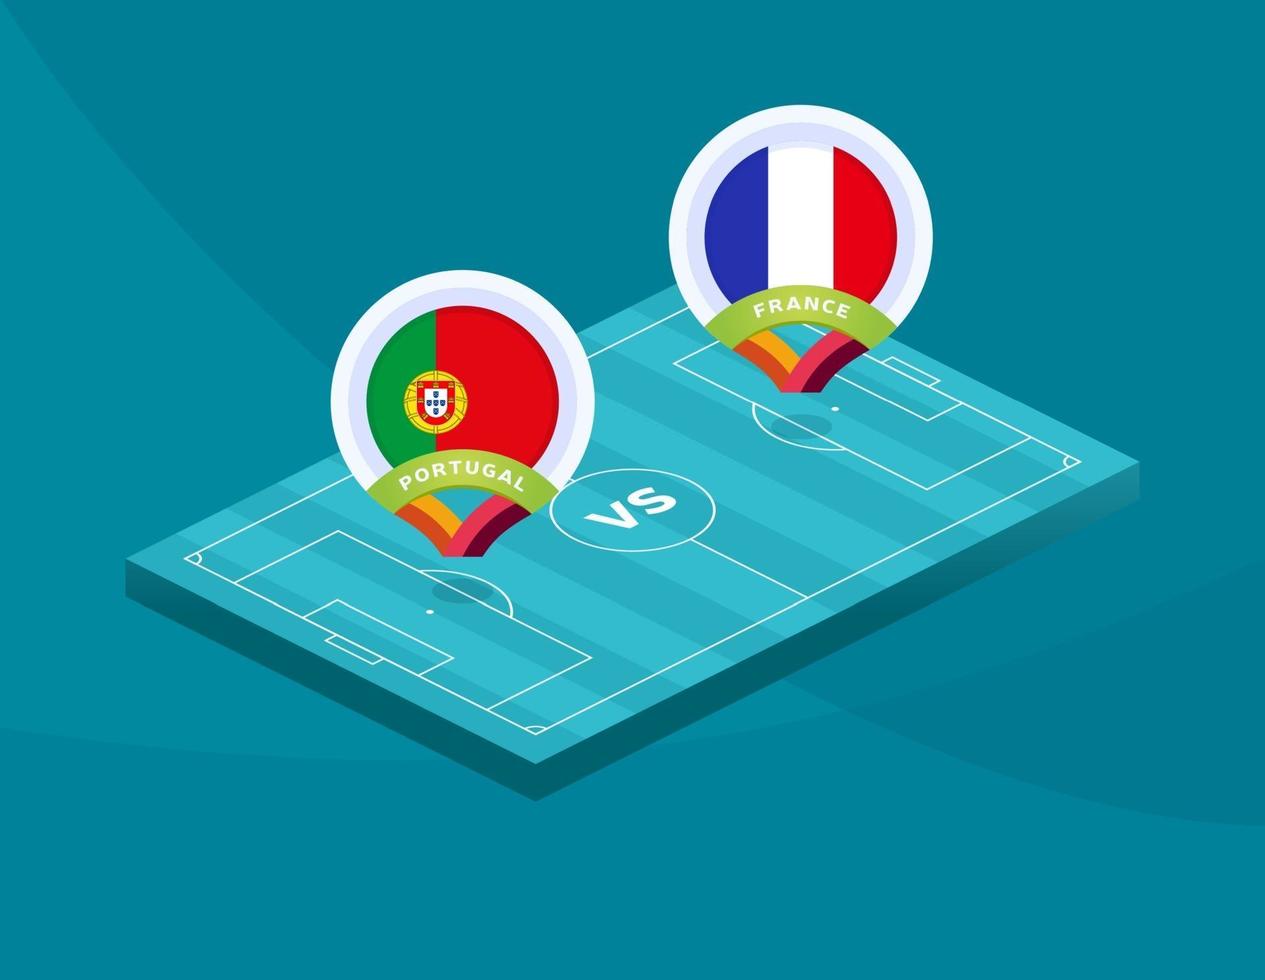 Portugal vs France football 2020 vecteur